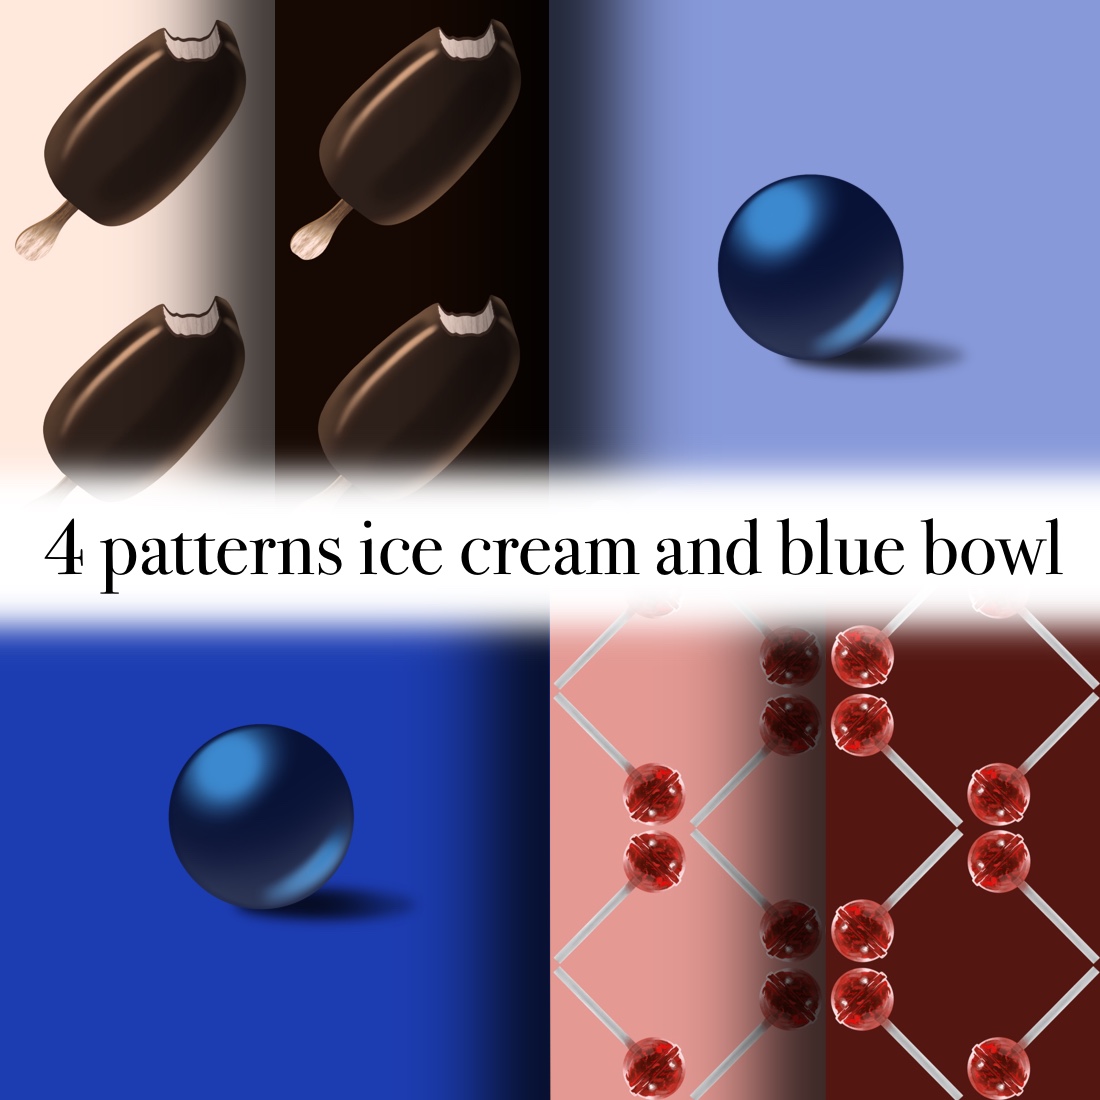 Patterns lollipops, ice cream, soda bottle, blue balloon preview image.